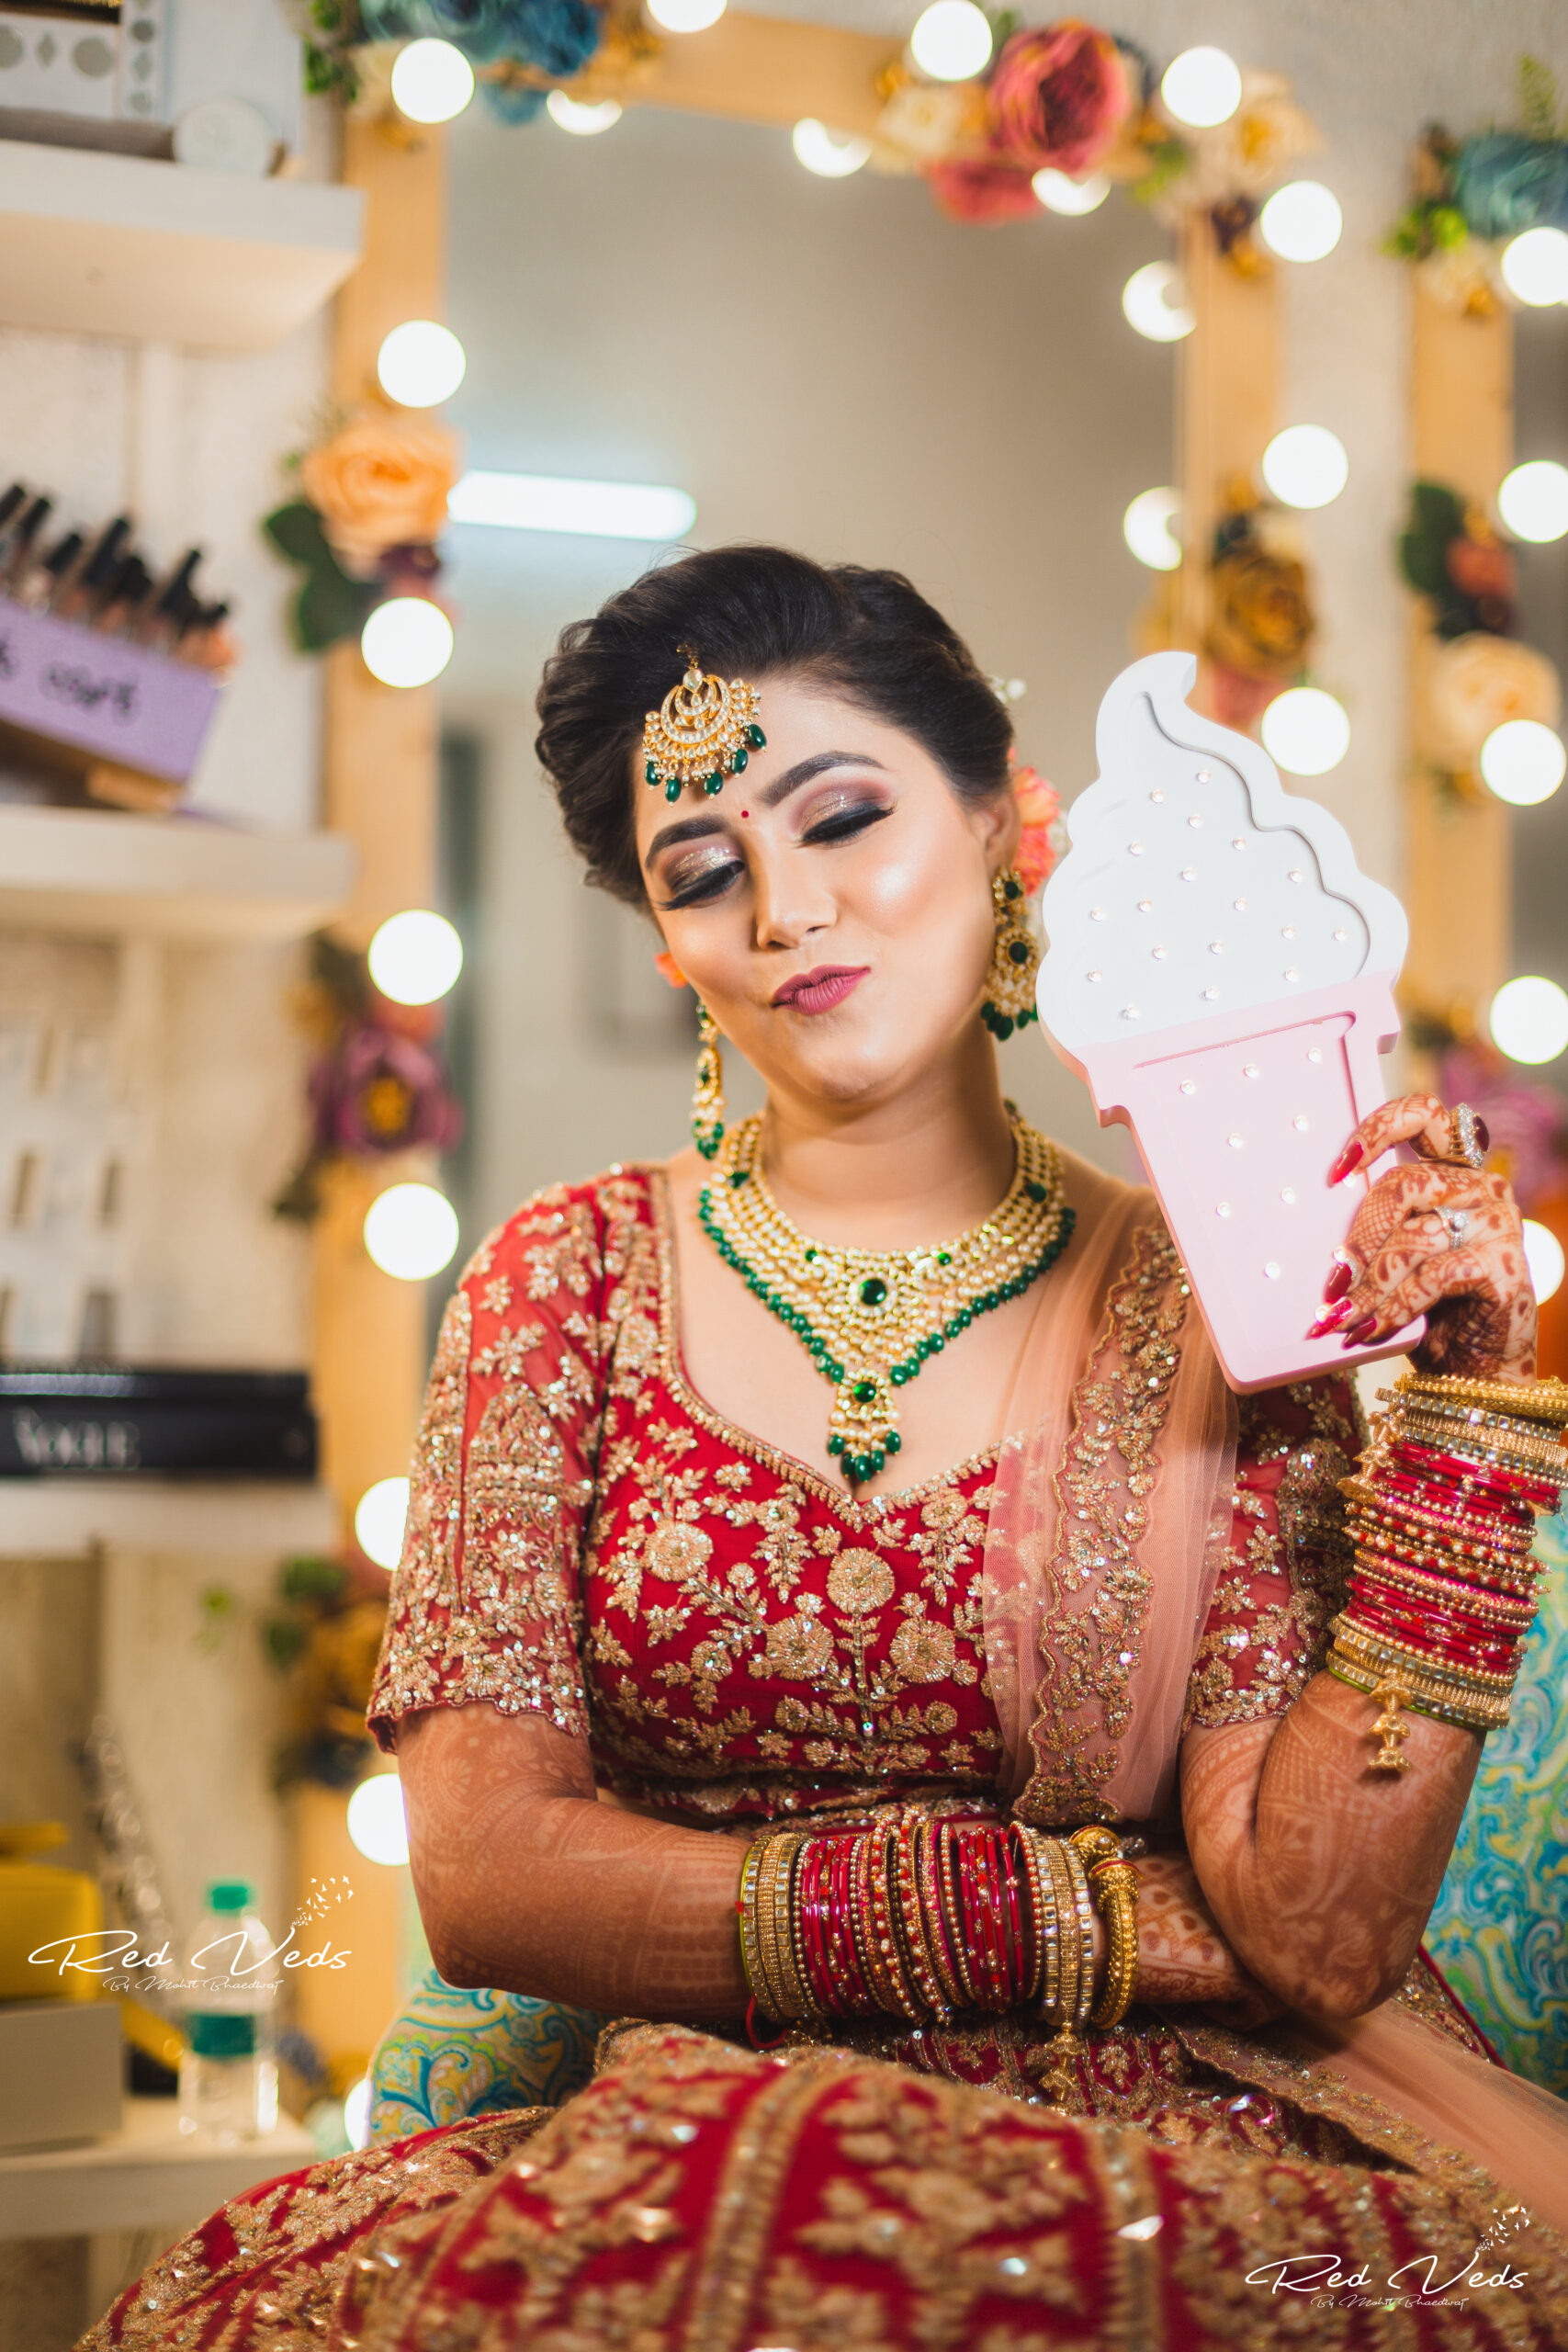 Heena Batra Makeovers - Price & Reviews | Delhi NCR Makeup Artist